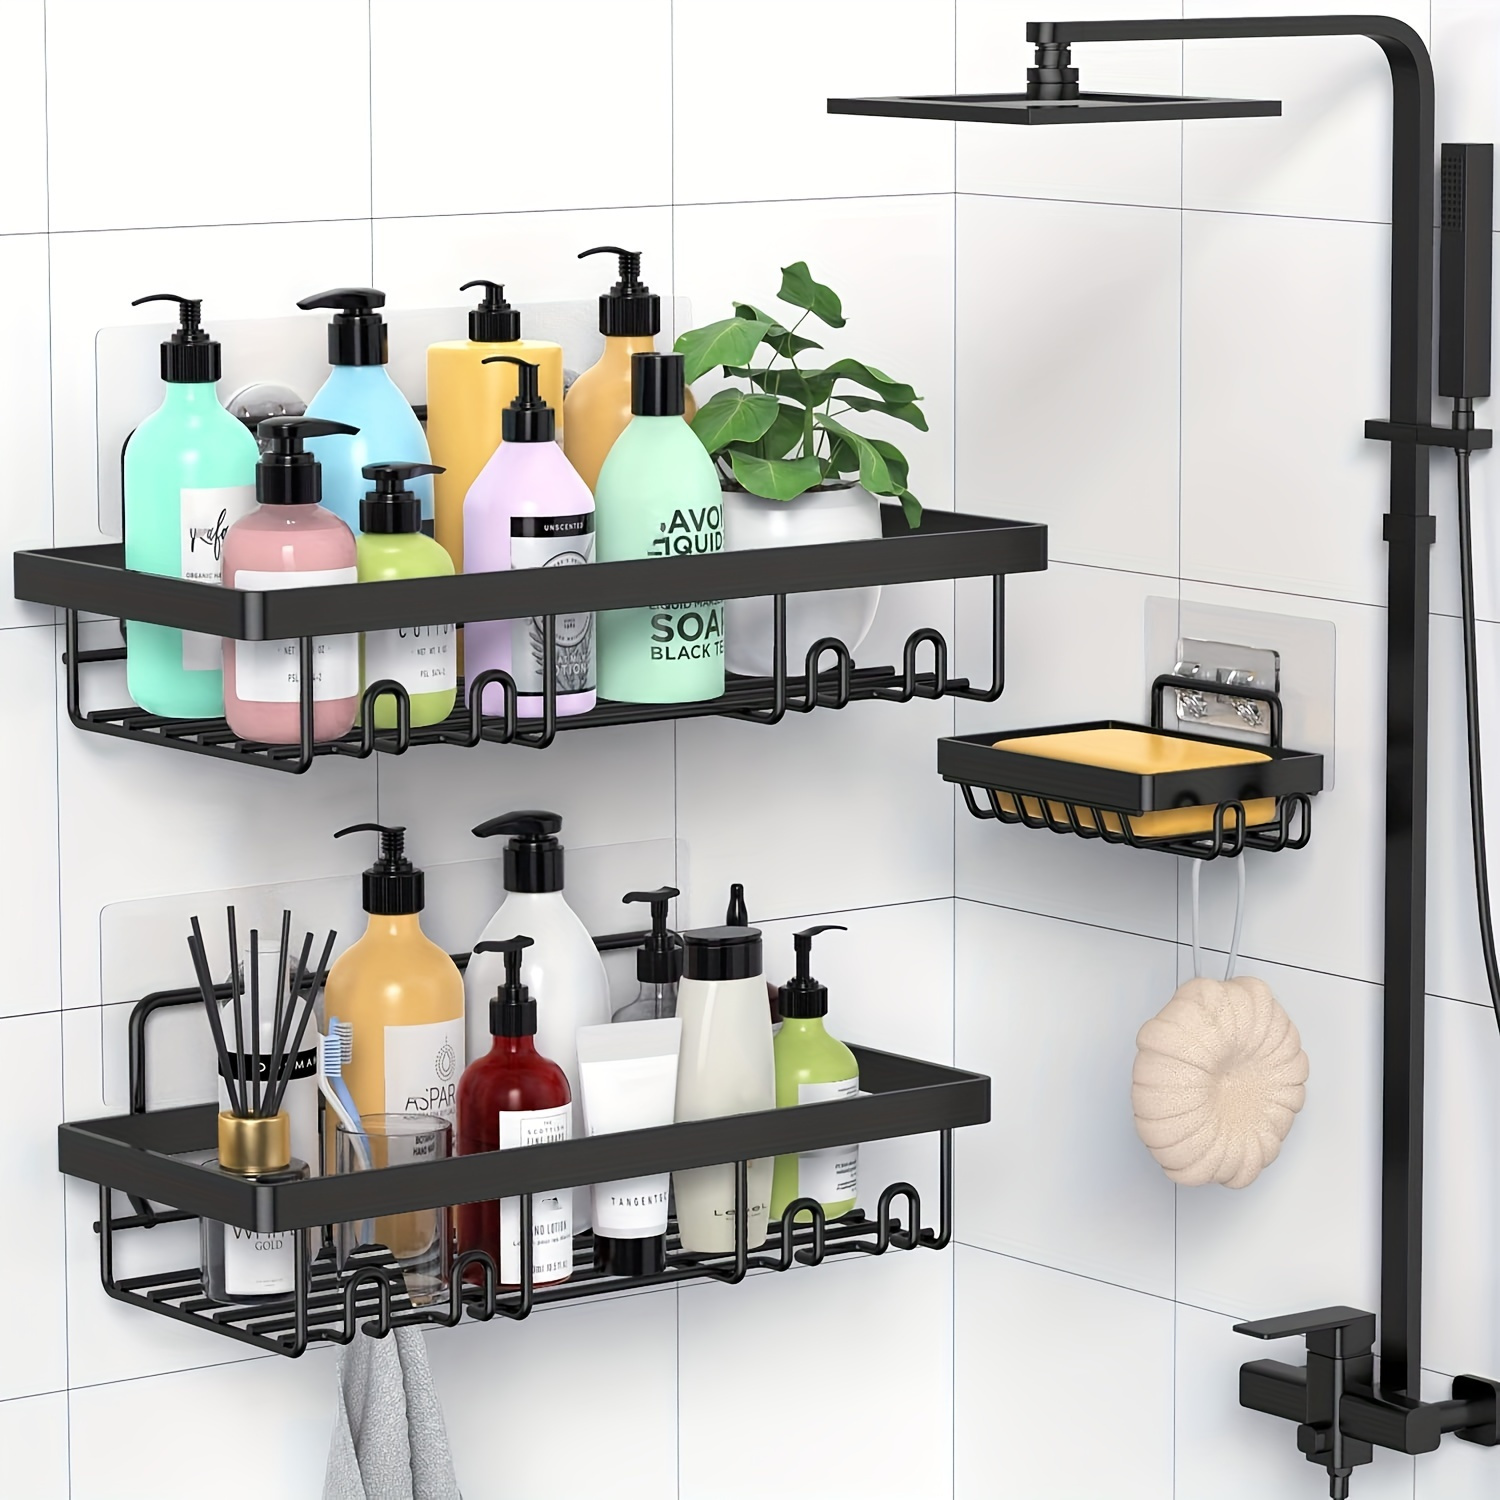 mDesign Bathroom Shower Caddy Tote for Shampoo, Soap, Razors - White